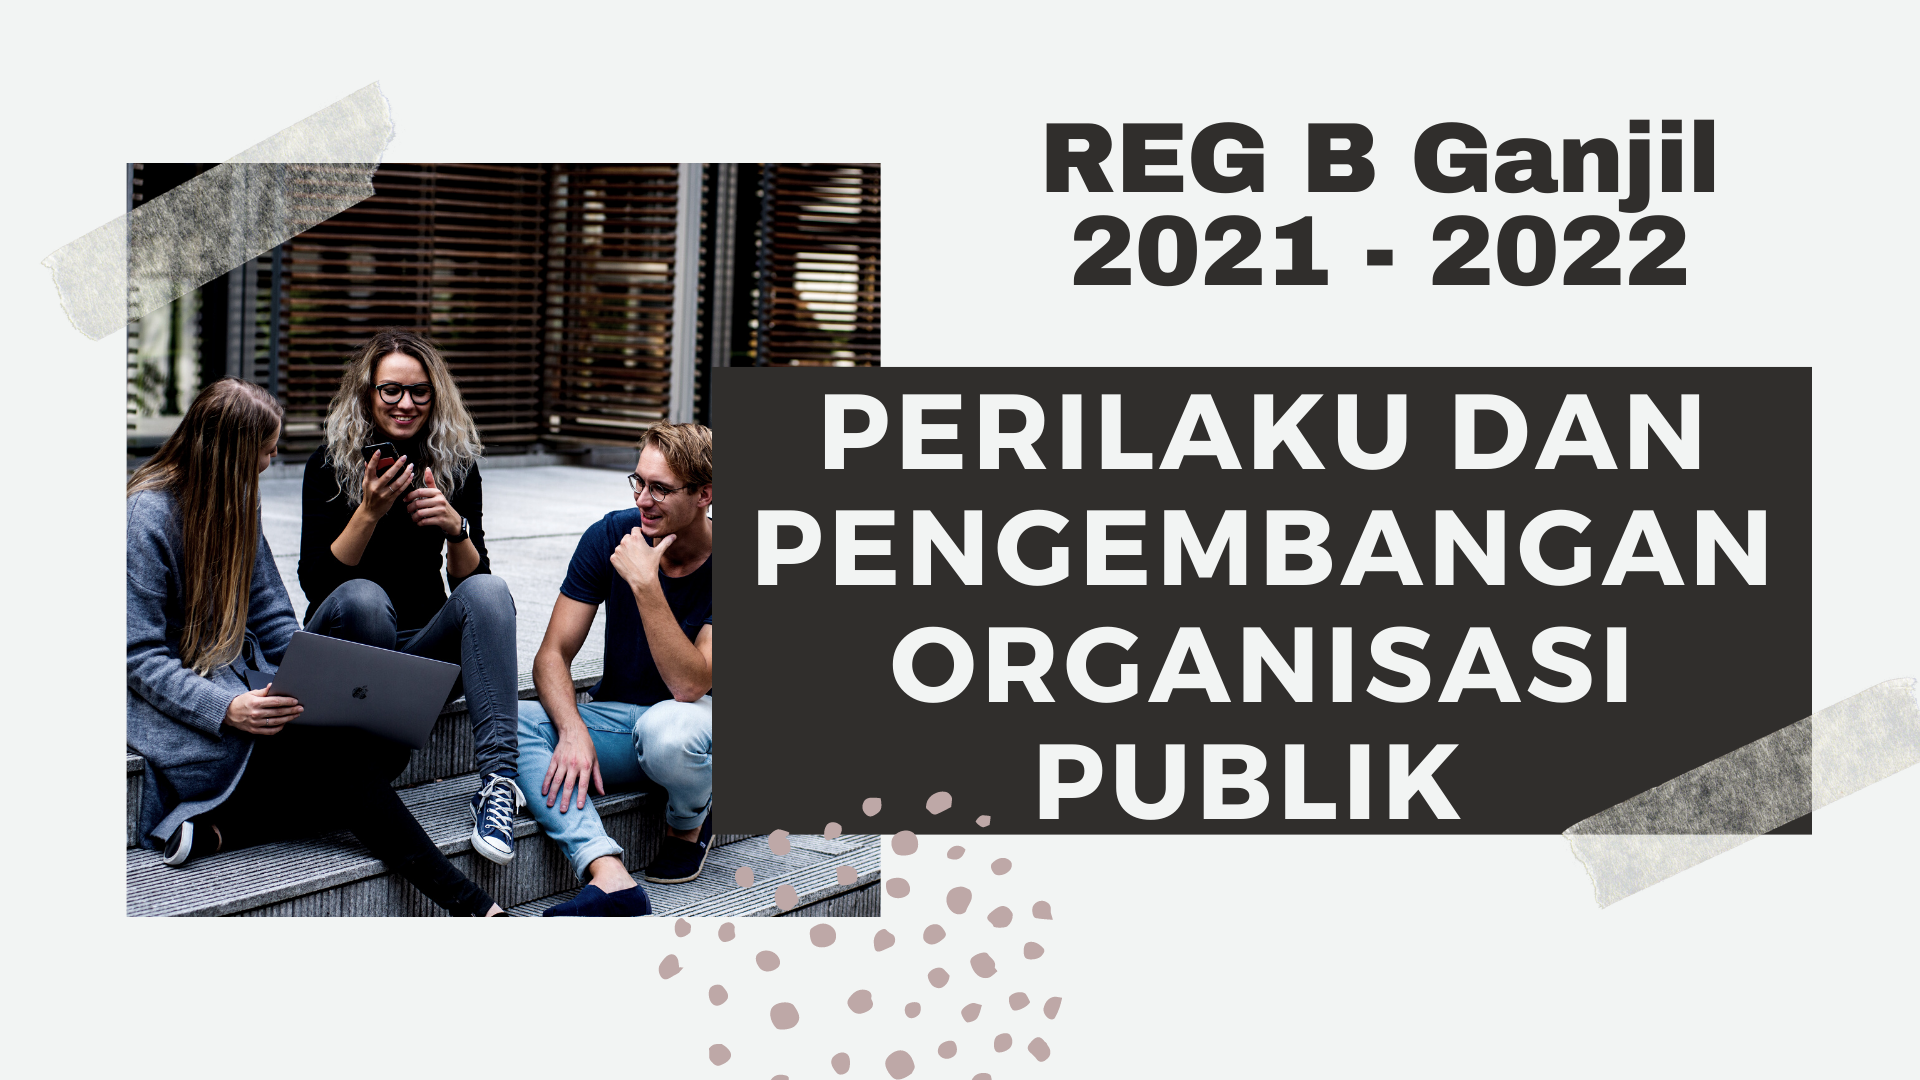 Perilaku dan Pengembangan Organisasi Publik_REG B_Ganjil 2021 - 2022